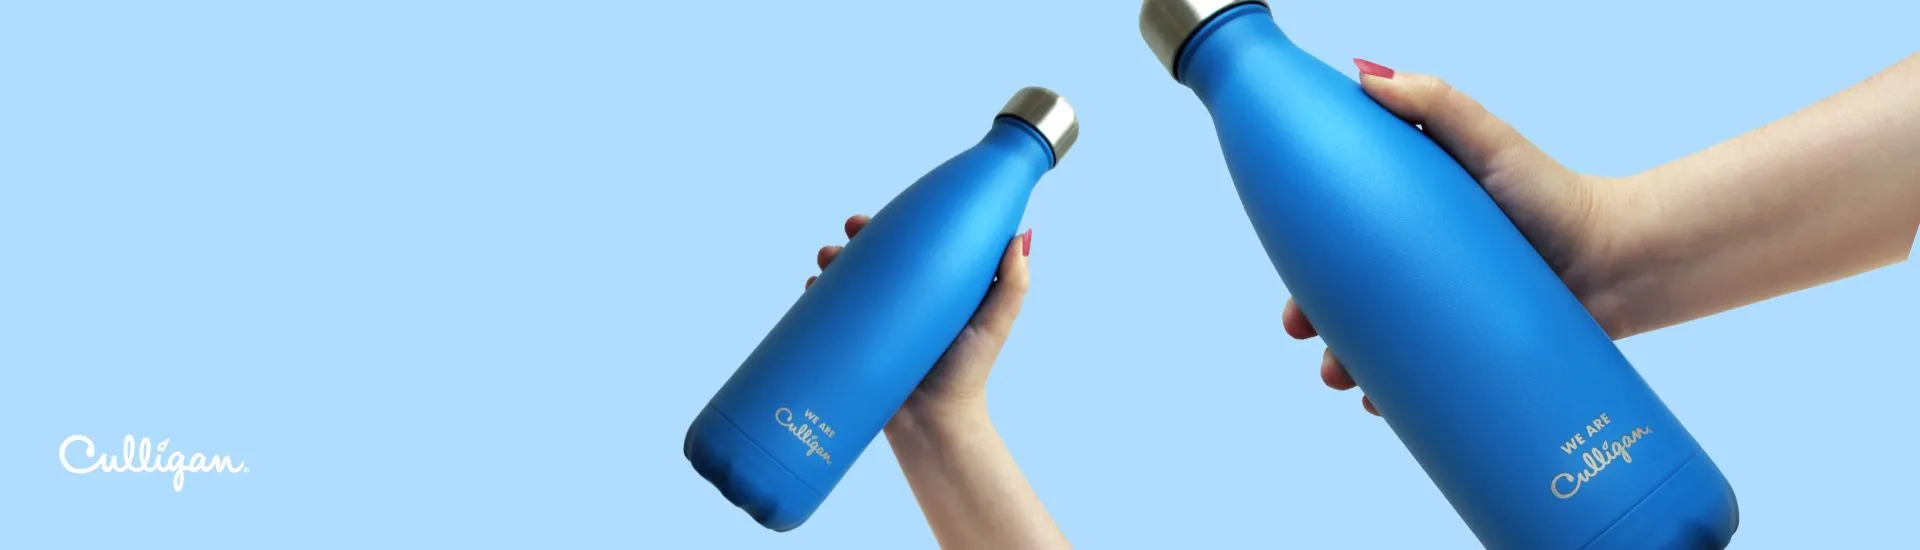 Culligan reusable water bottle